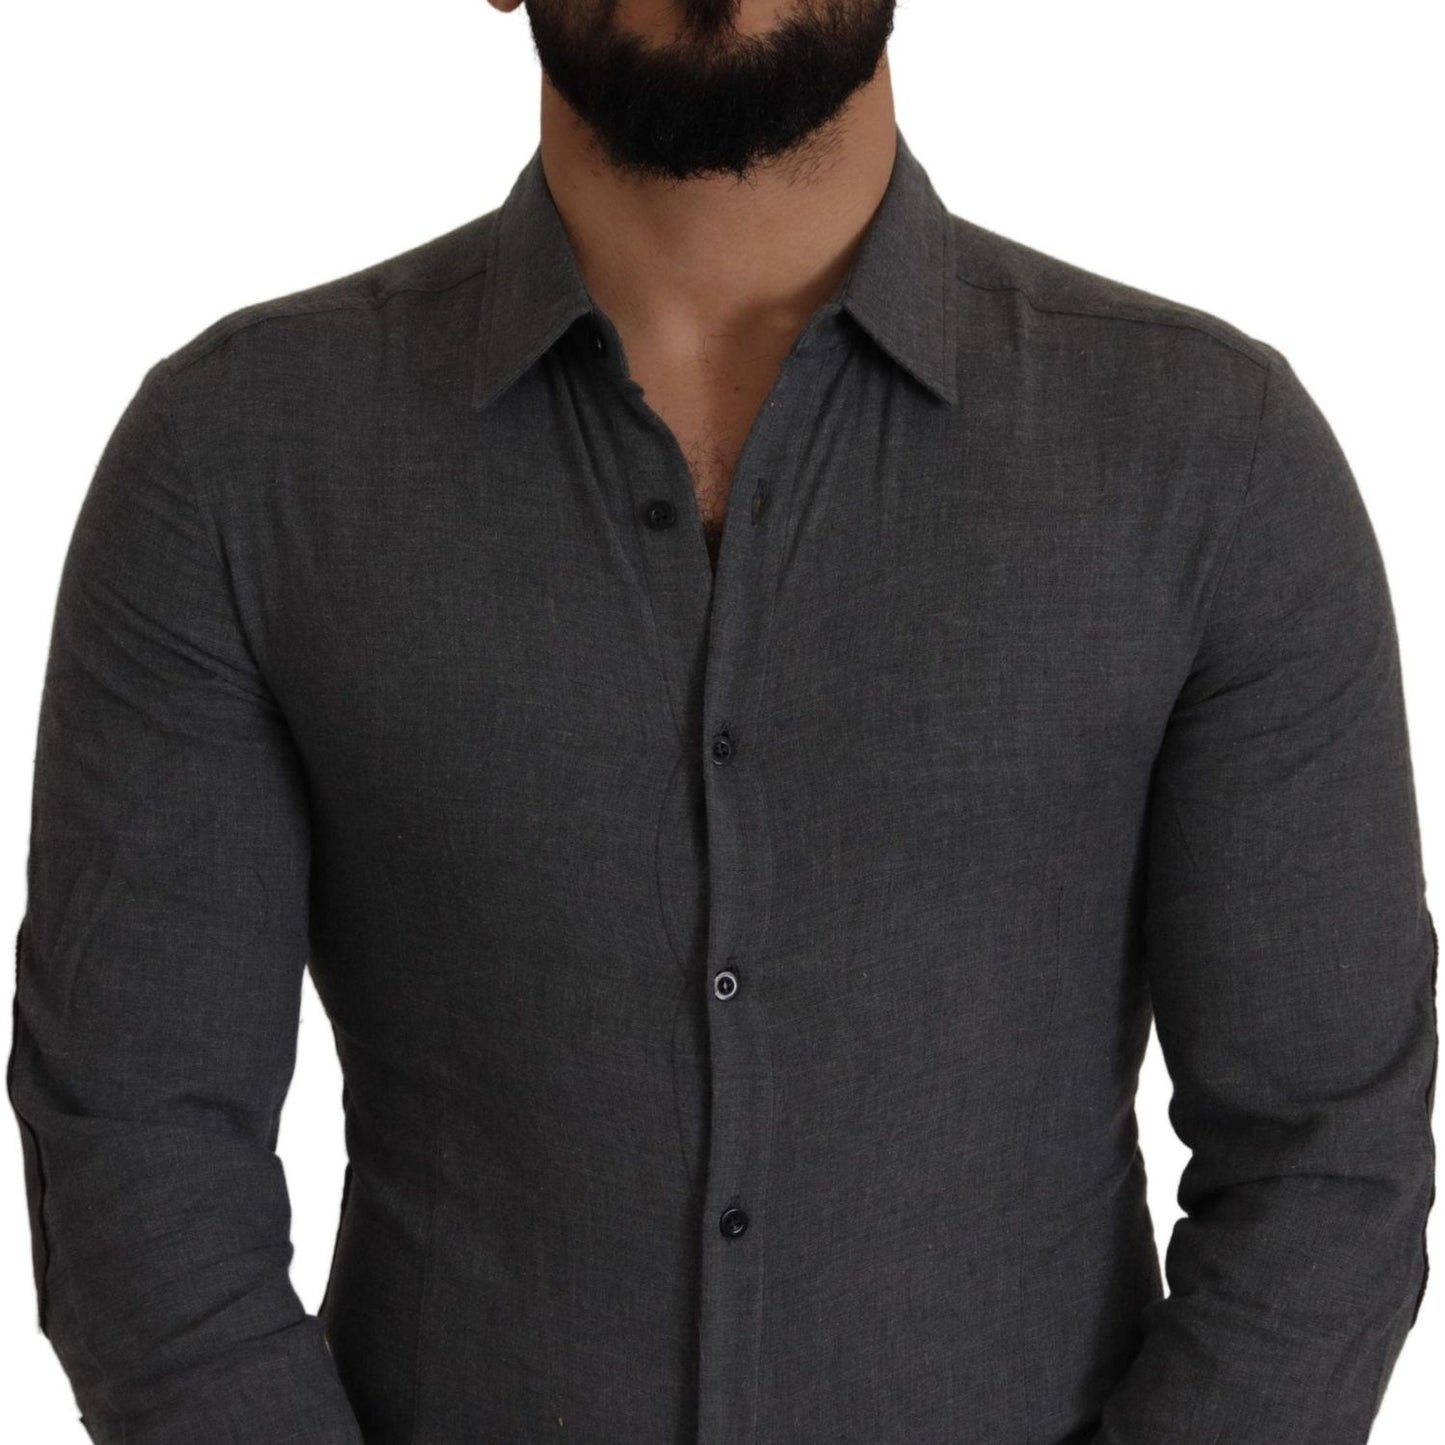 Sleek Gray Cotton Casual Button Front Shirt